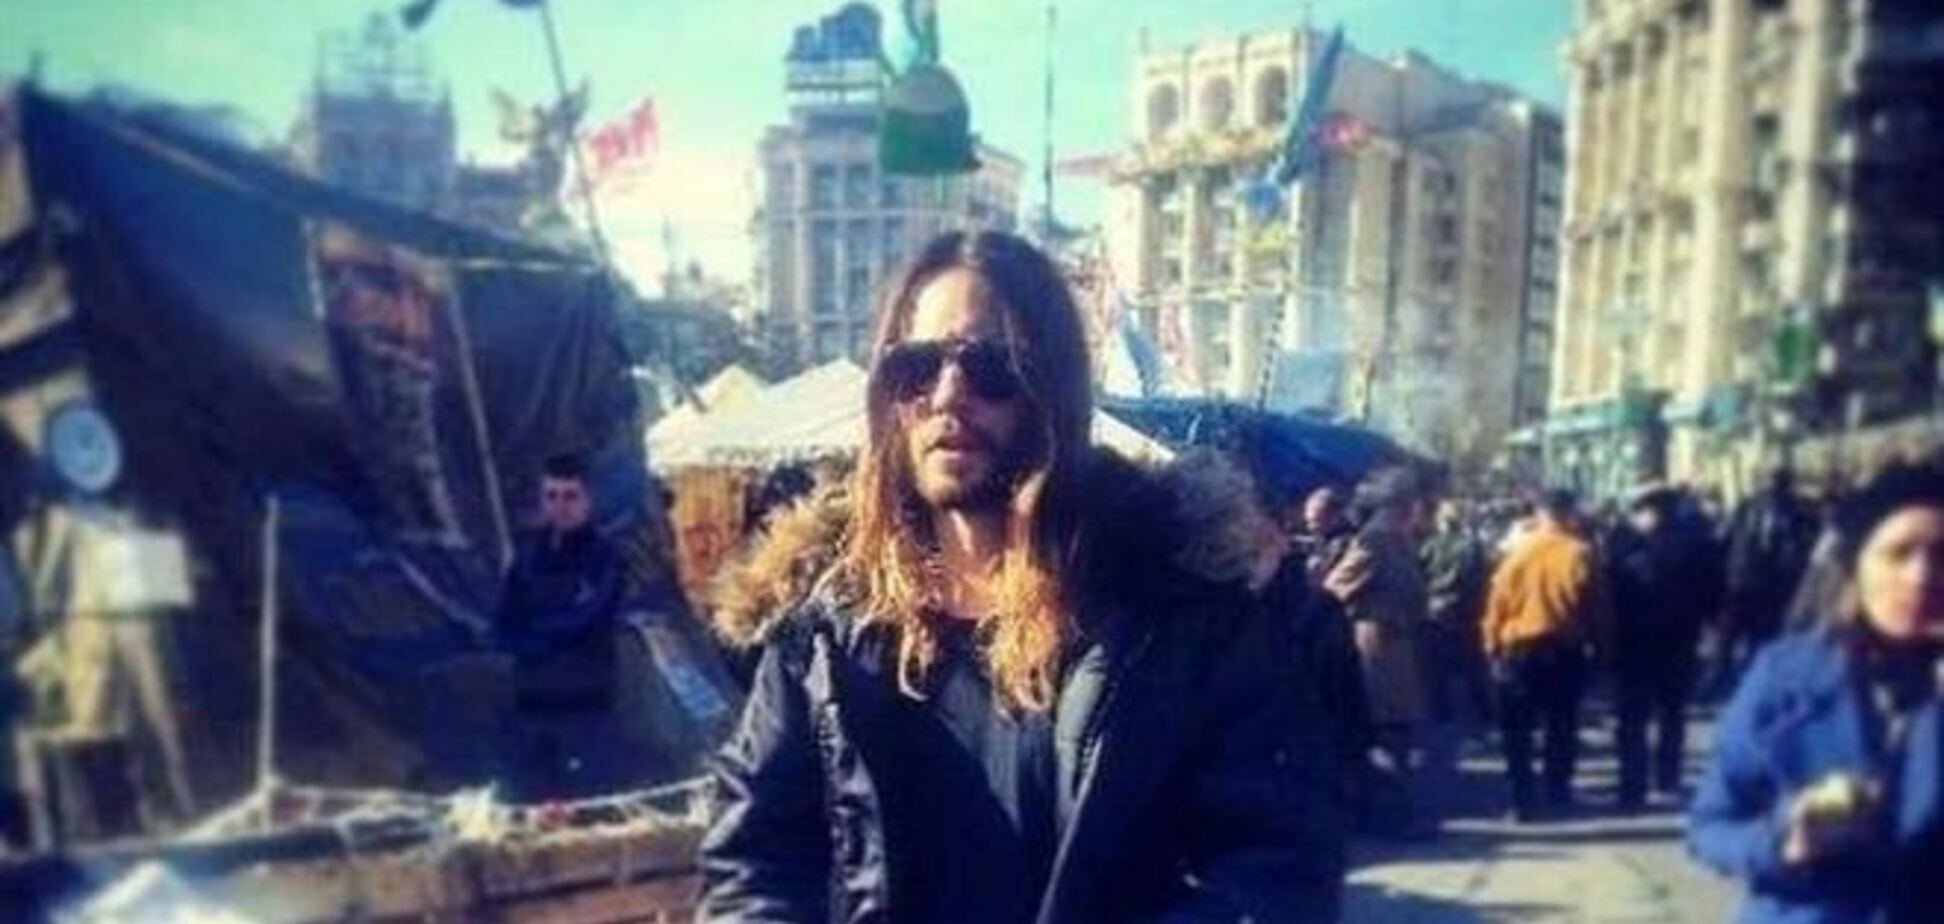 Джаред Лето прогулялся по палаточному городку на Майдане